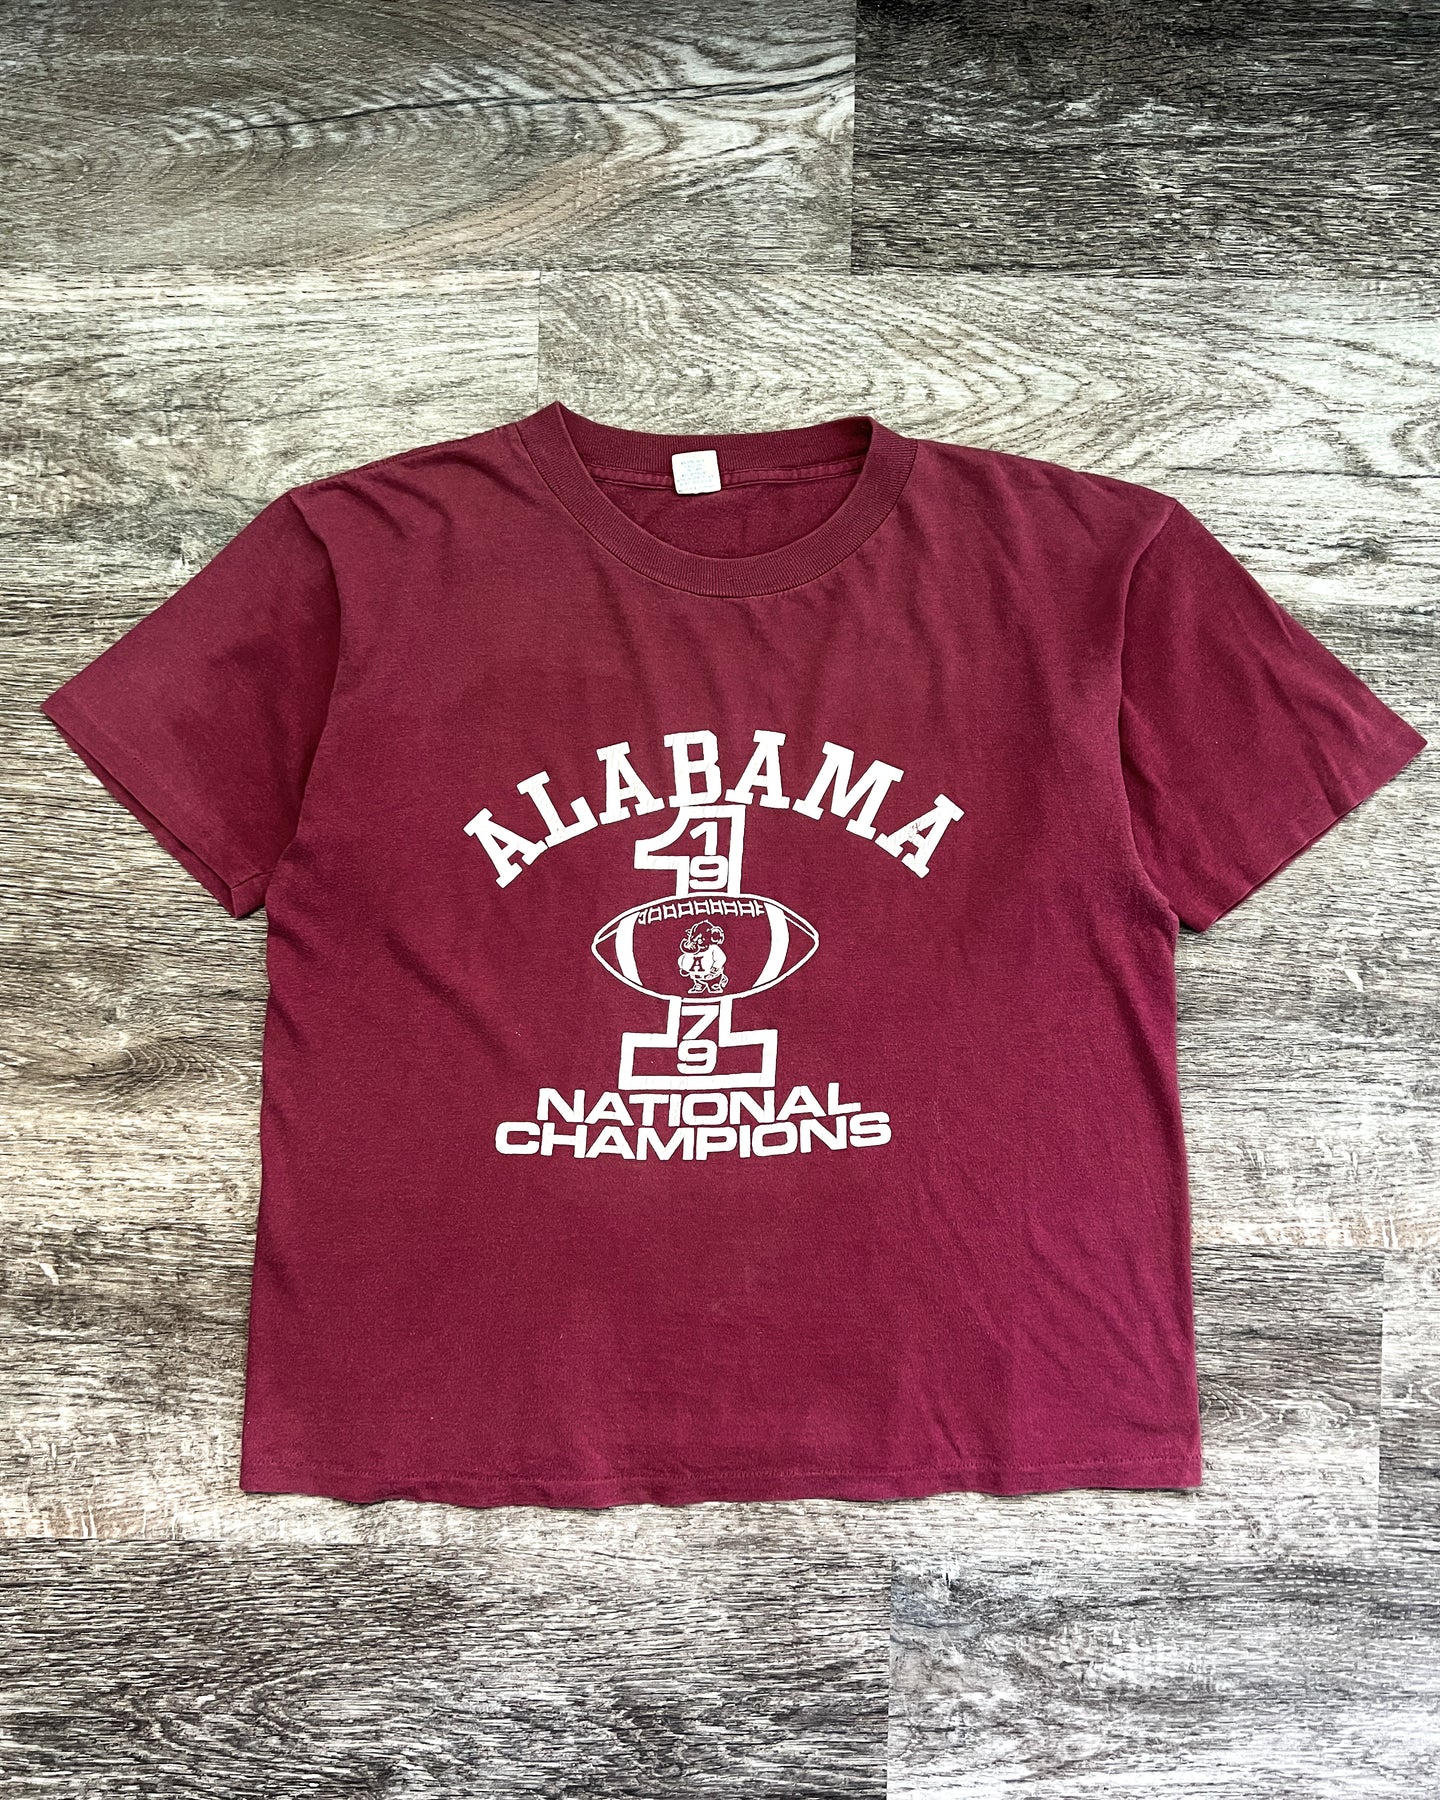 1970s Alabama National Champions Single Stitch Tee - Size Medium